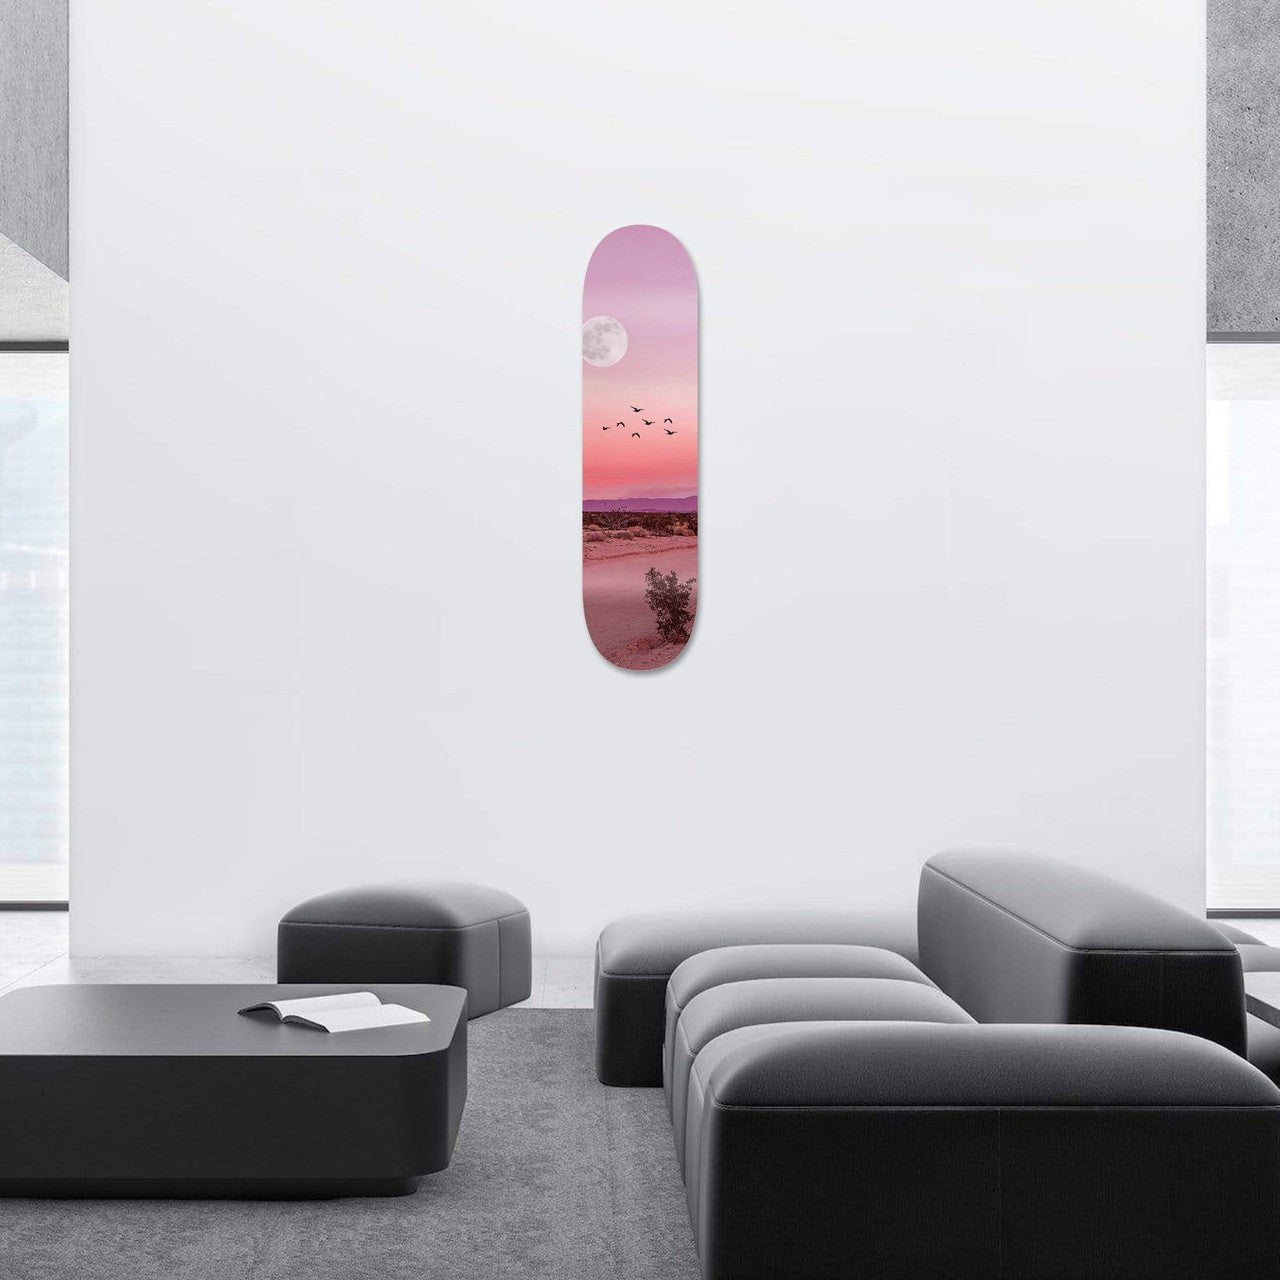 "Dreamy Desert" - Skateboard - The Art Lab Acrylic Glass Art - Skateboards, Surfboards & Glass Prints Wall Decor for your Home.